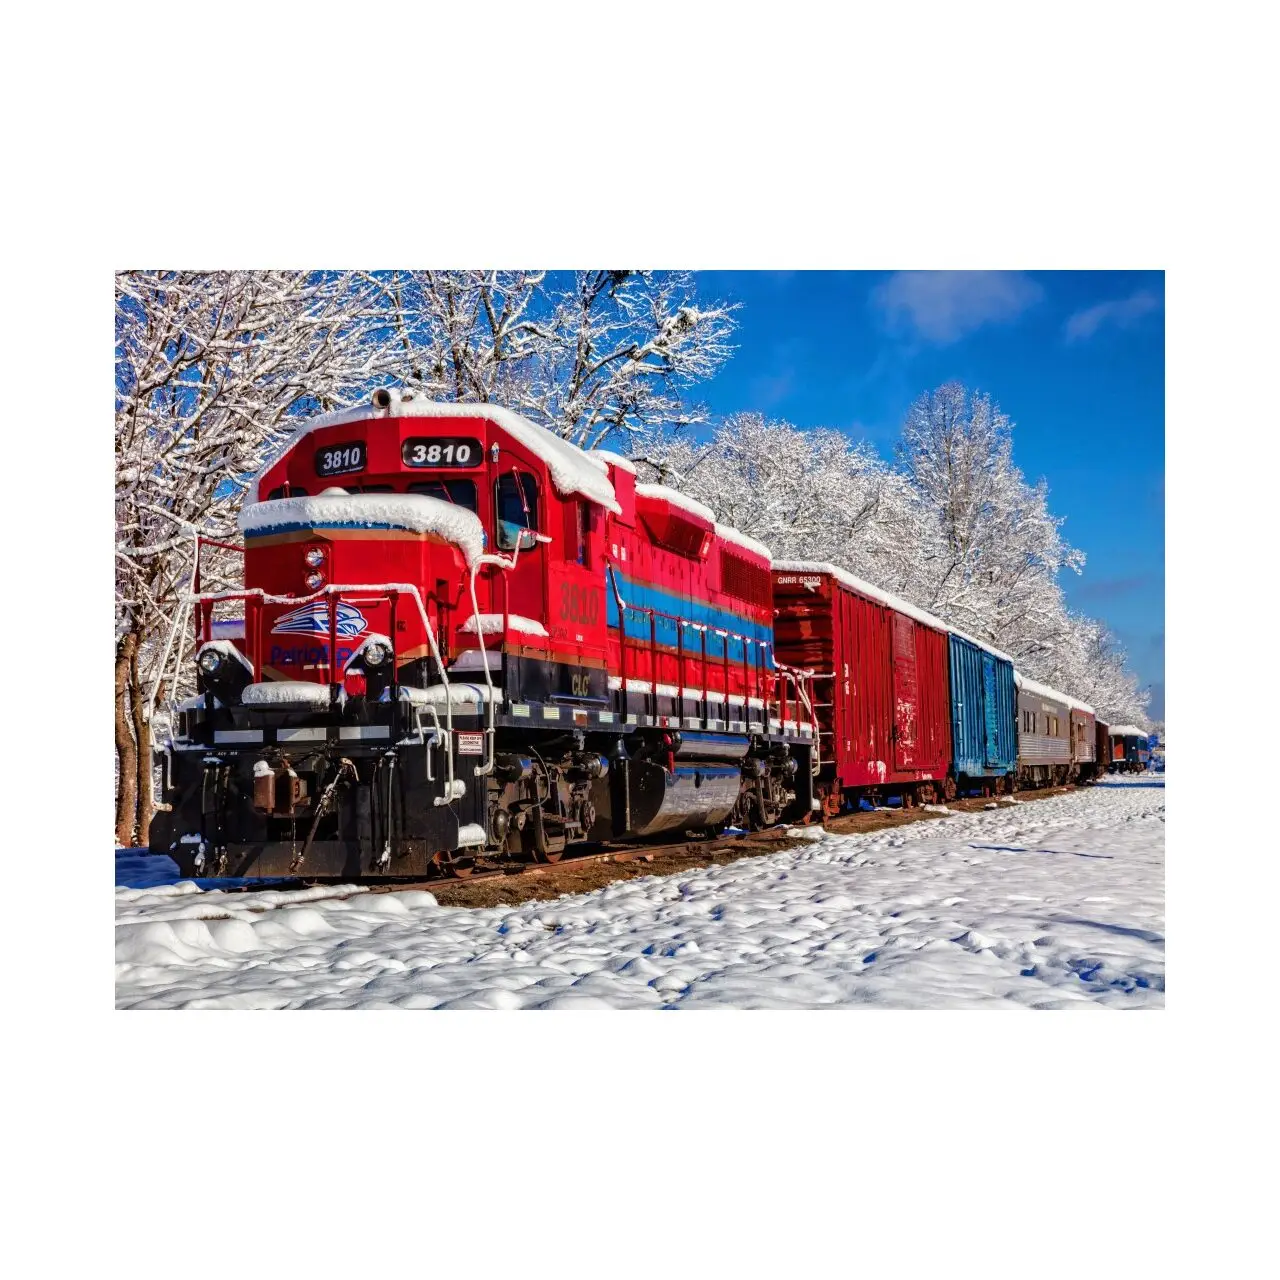 Puzzle Roter Zug im Schnee Teile 1500